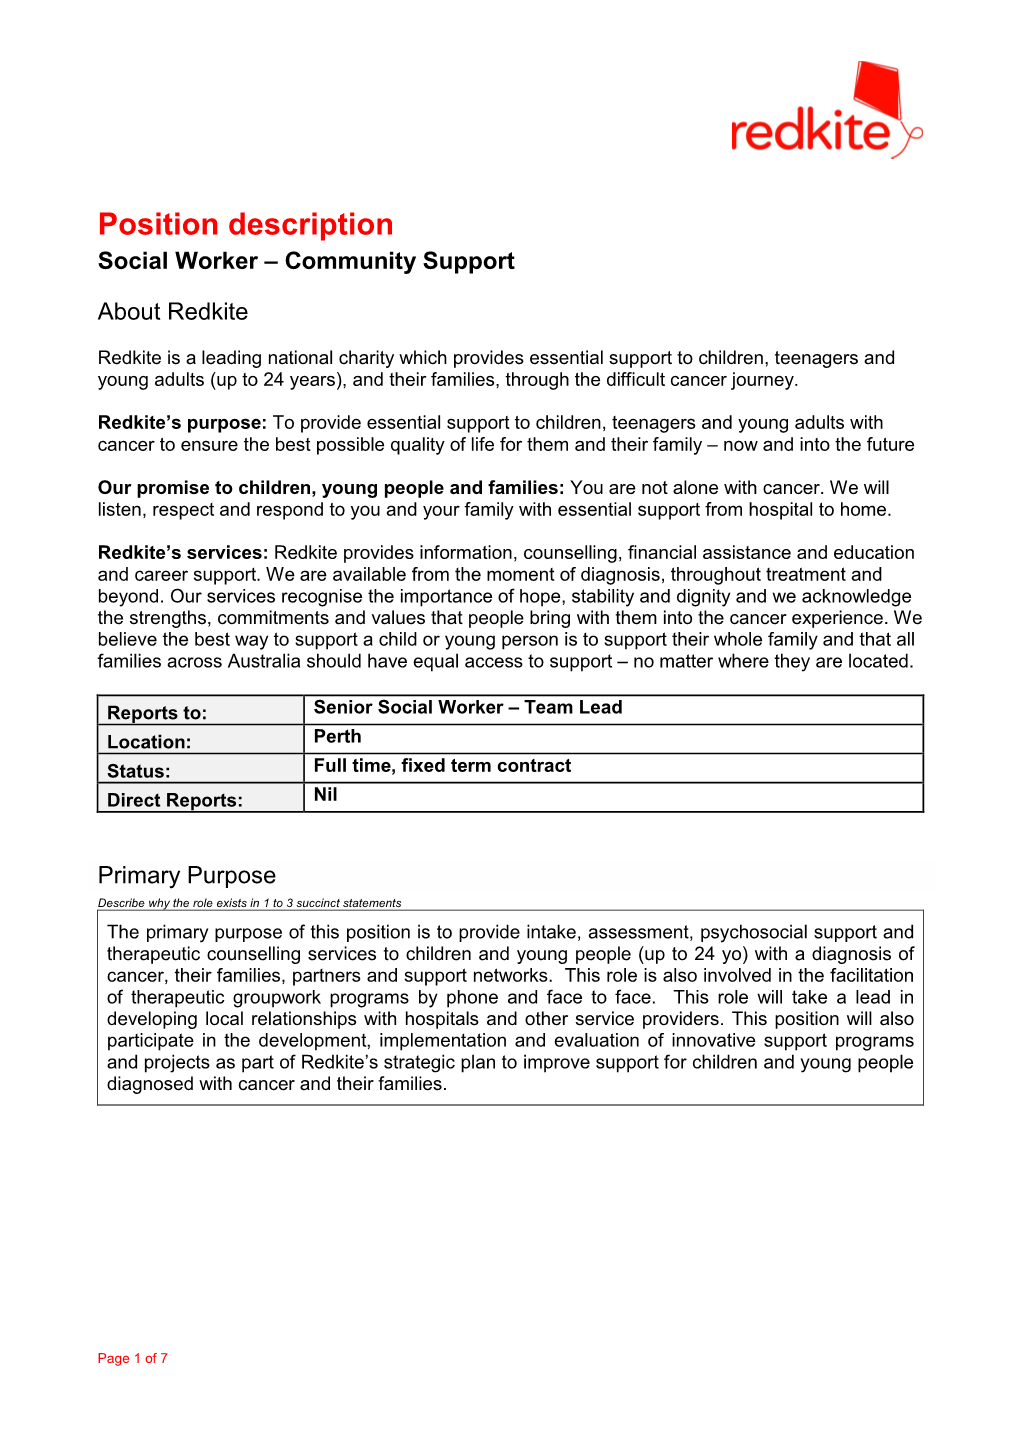 Position Description Social Worker – Community Support